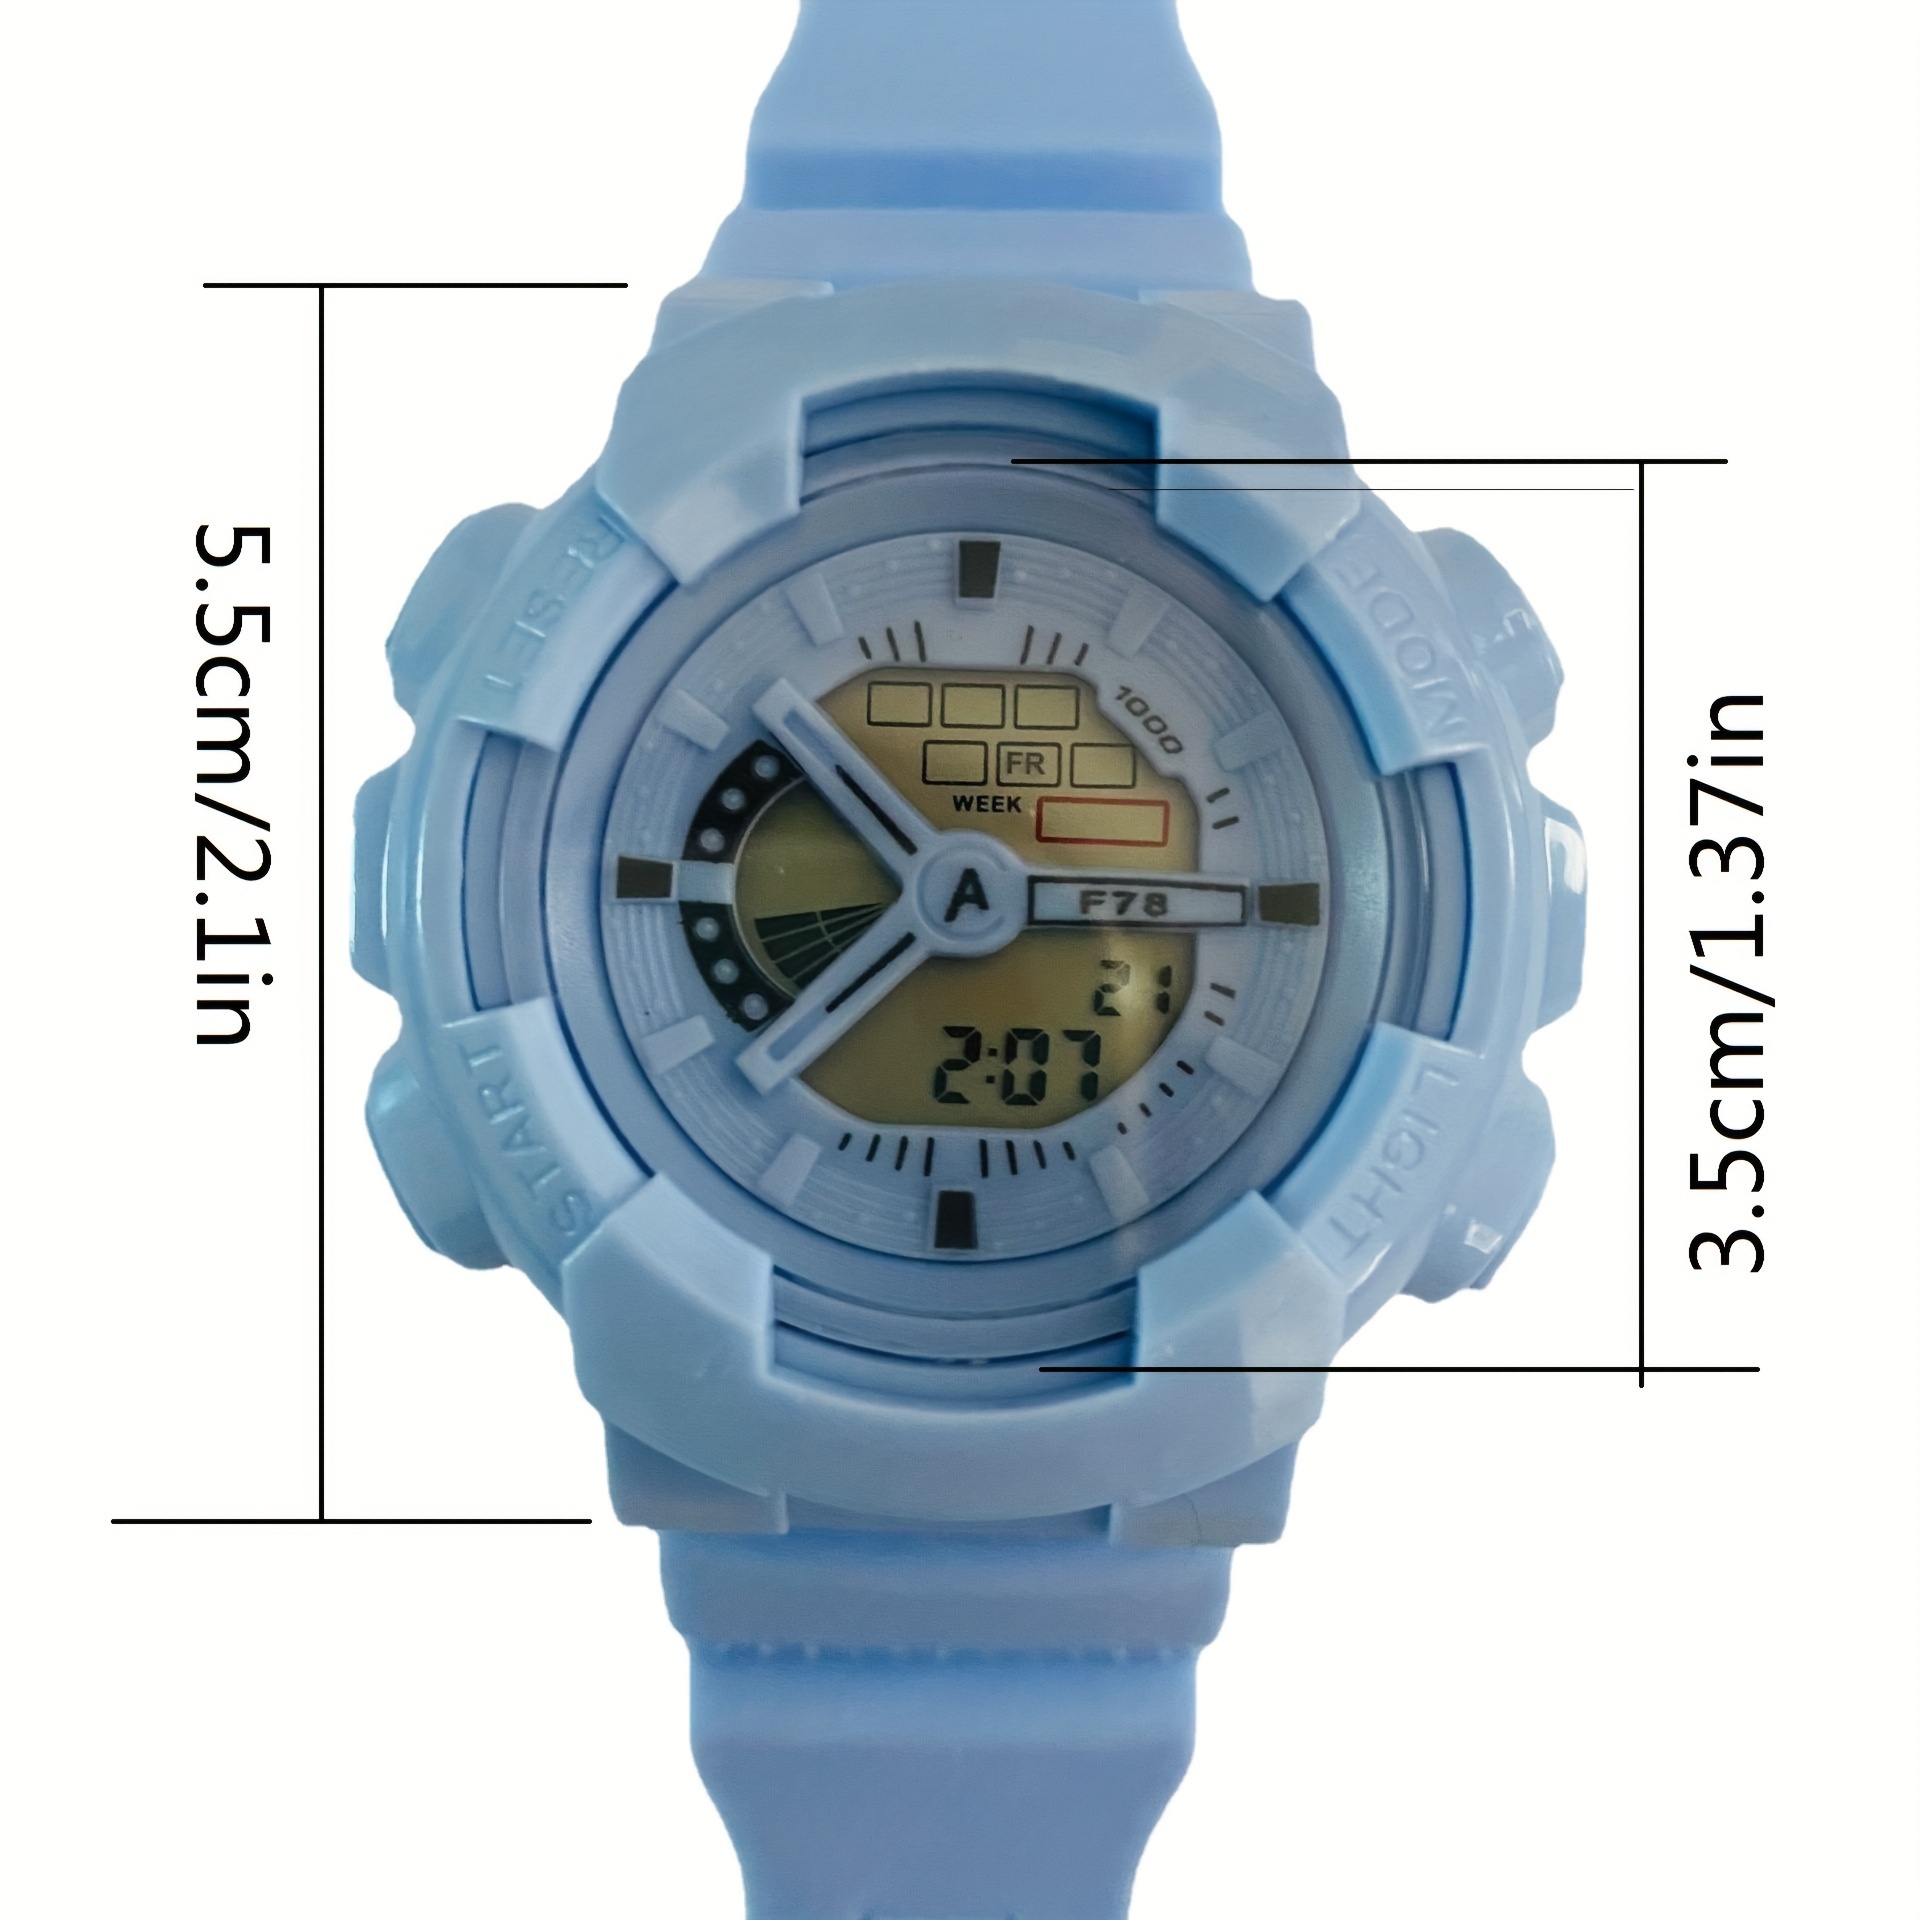 Reloj Para Niños Deportes De Moda Reloj Digital LED Reloj Para Mujeres Y Niñas Reloj Electrónico A Prueba De Agua detalles 0